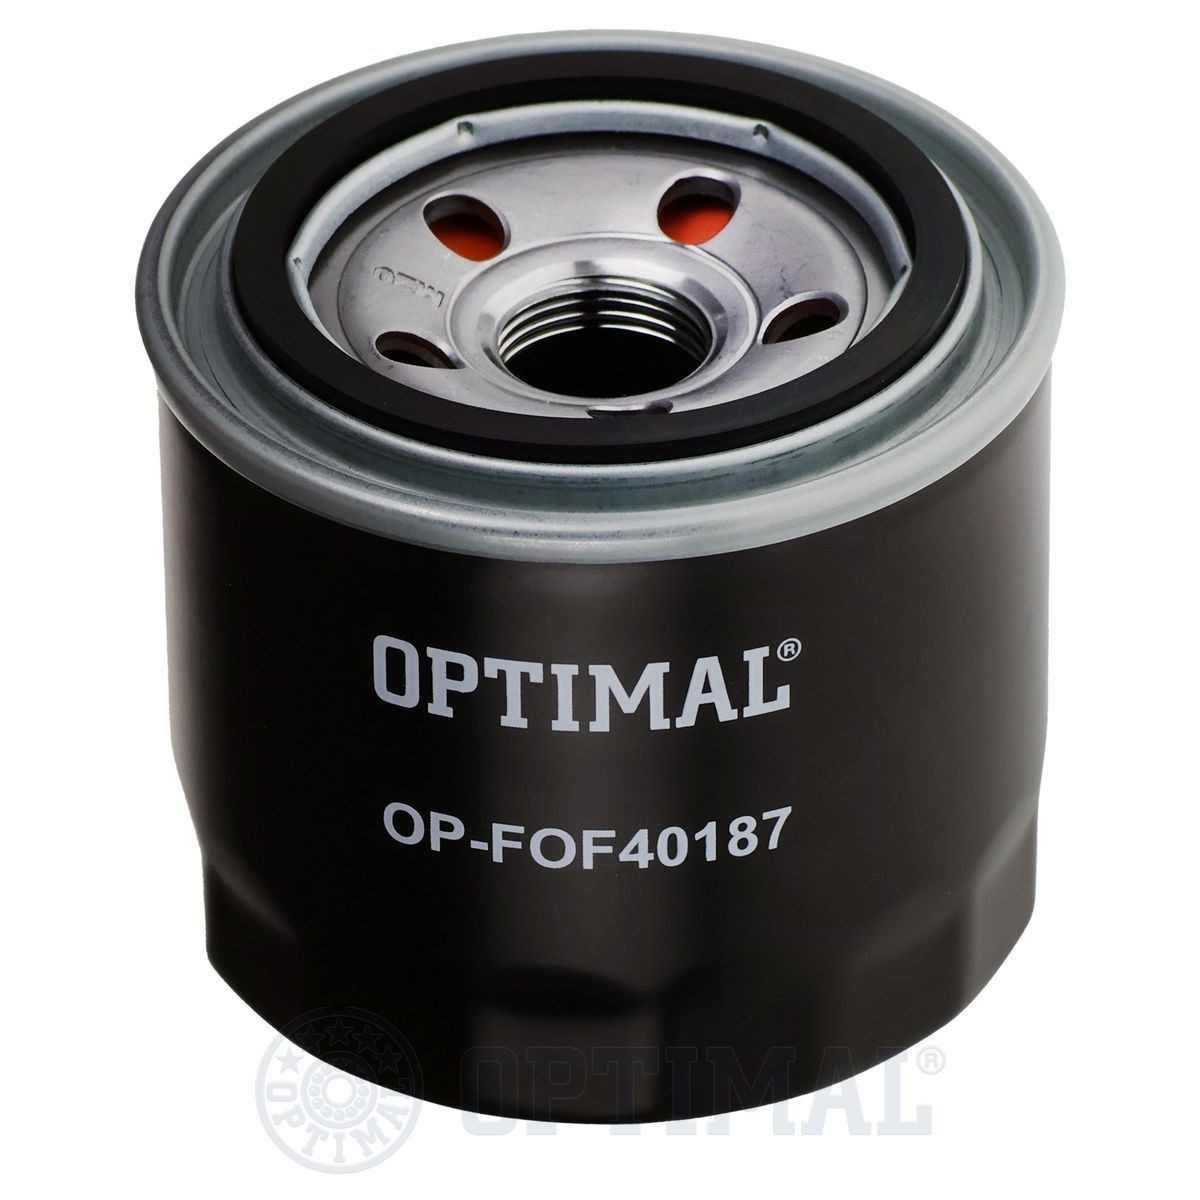 OPTIMAL OP-FOF40187 Oil filter 8 971 122 630